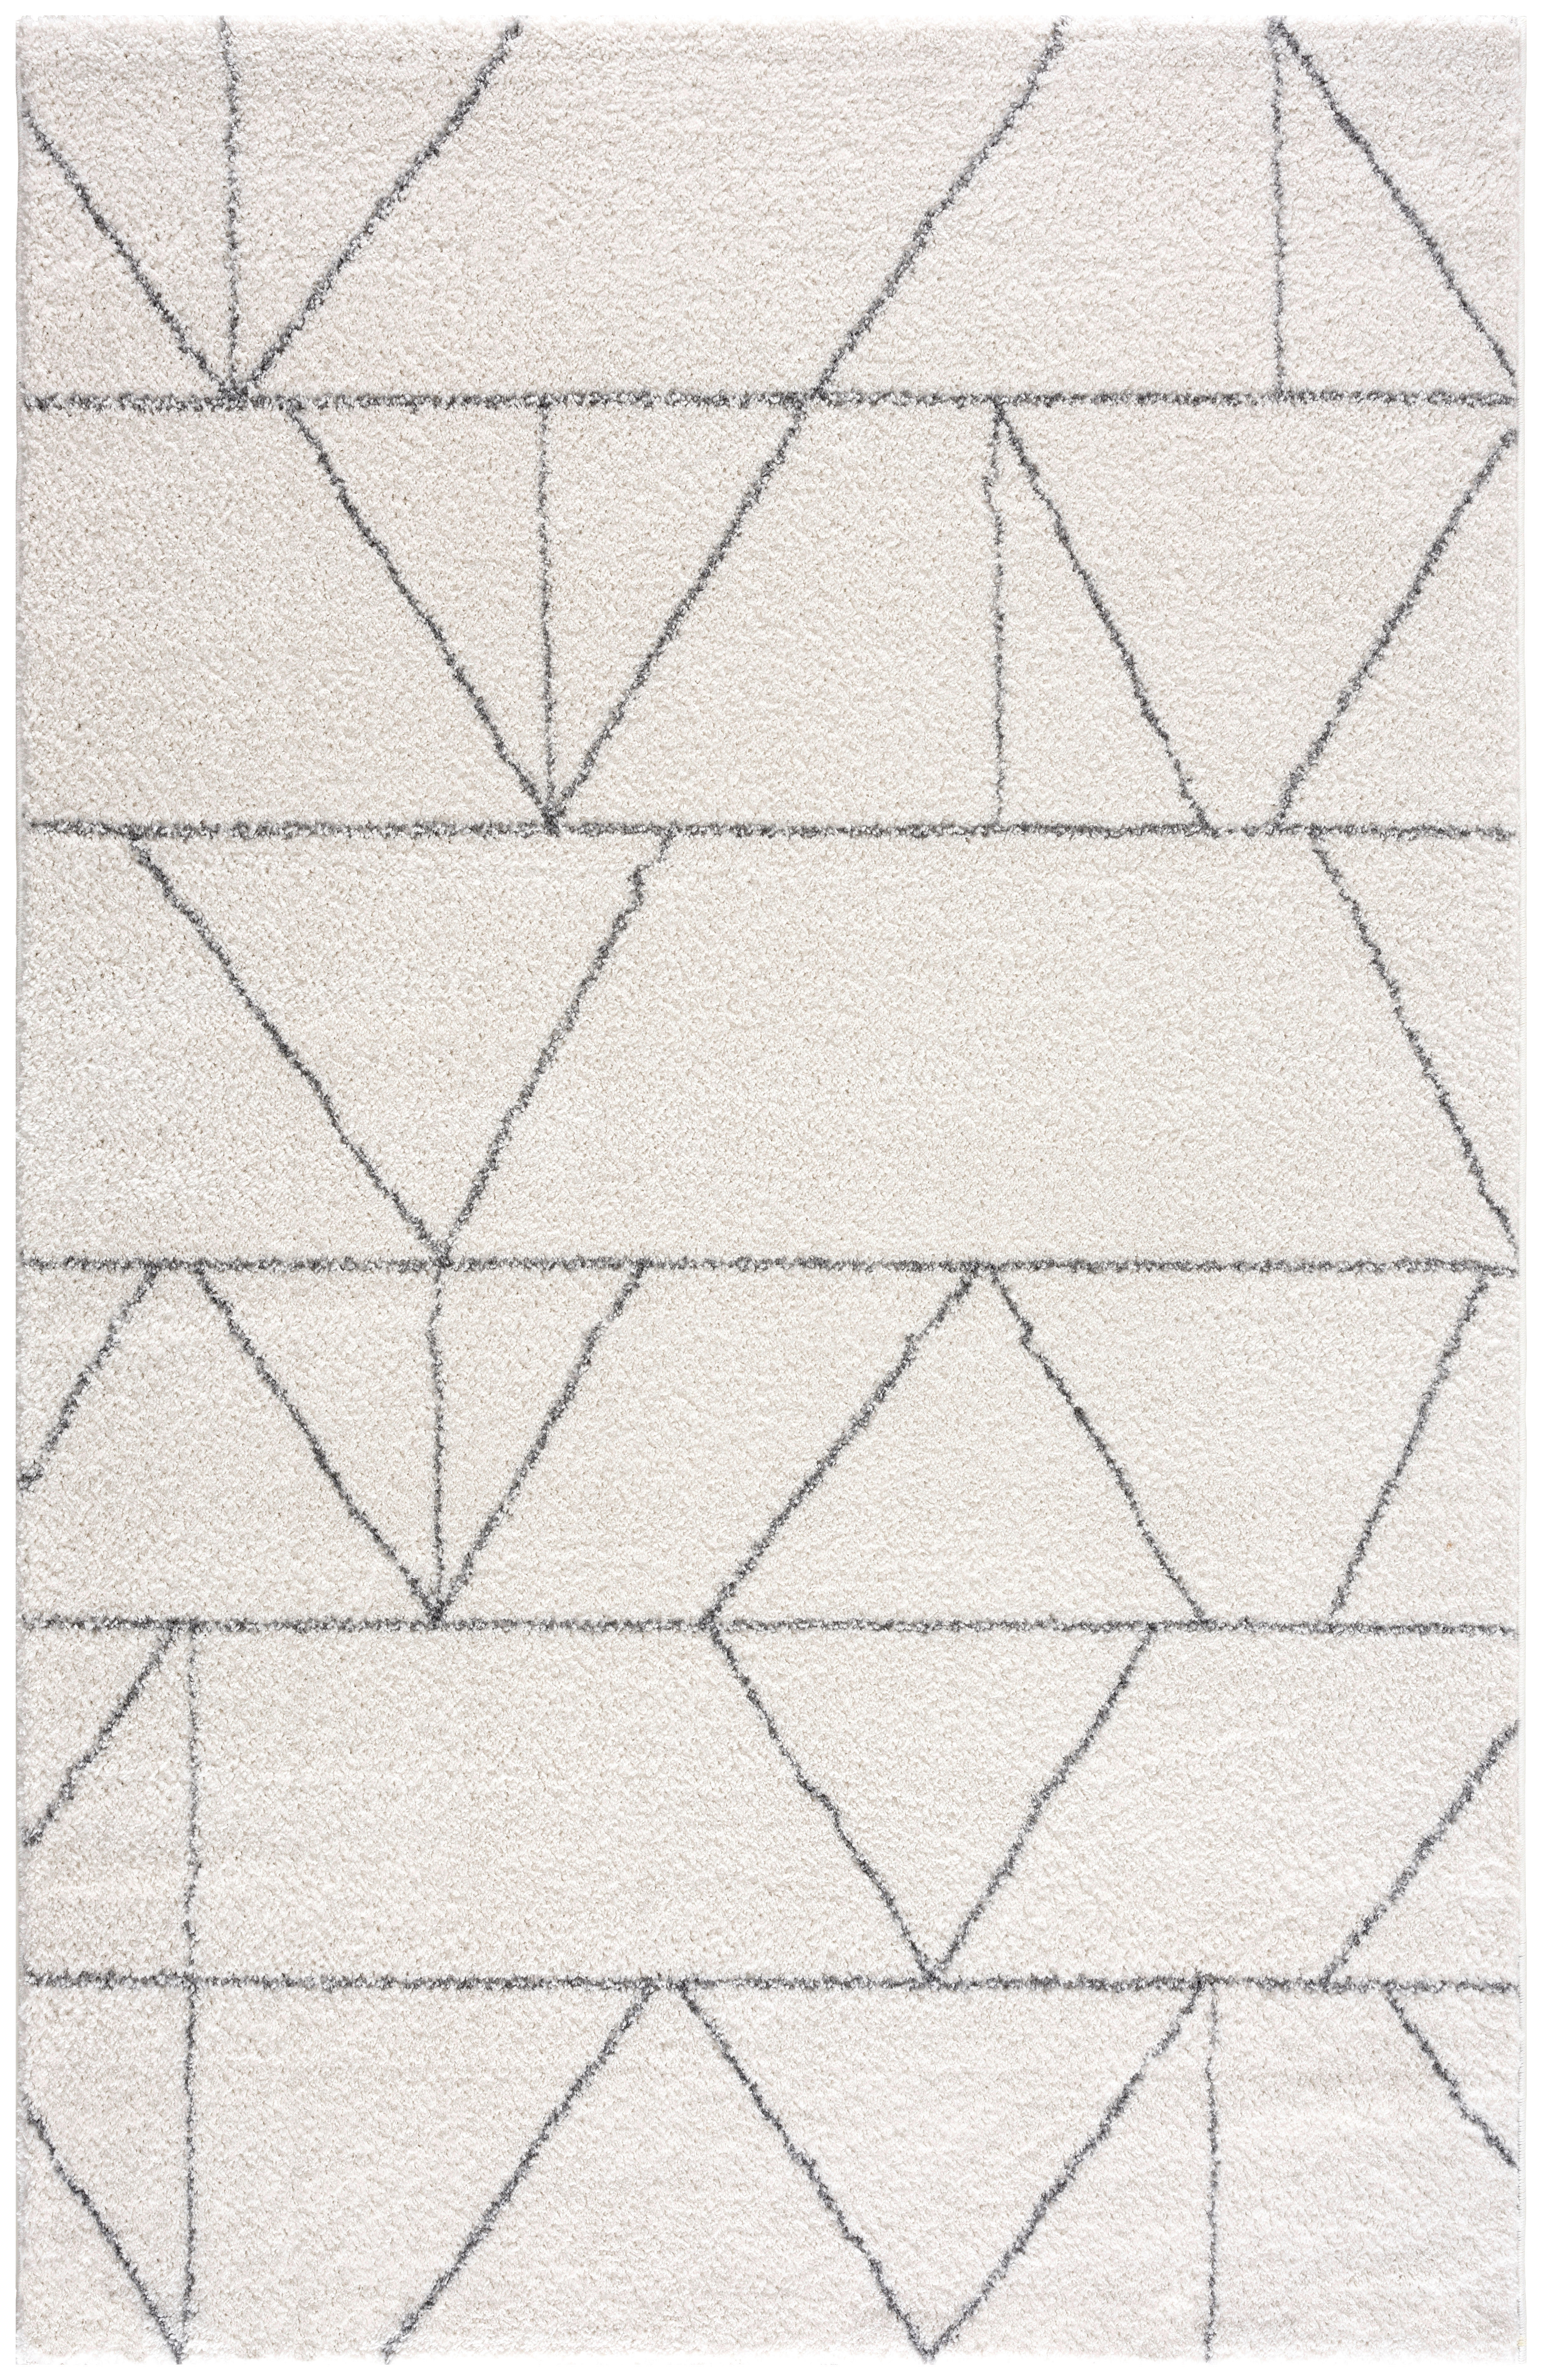 WEBTEPPICH  80/150 cm  Weiß   - Weiß, Design, Textil (80/150cm) - Novel